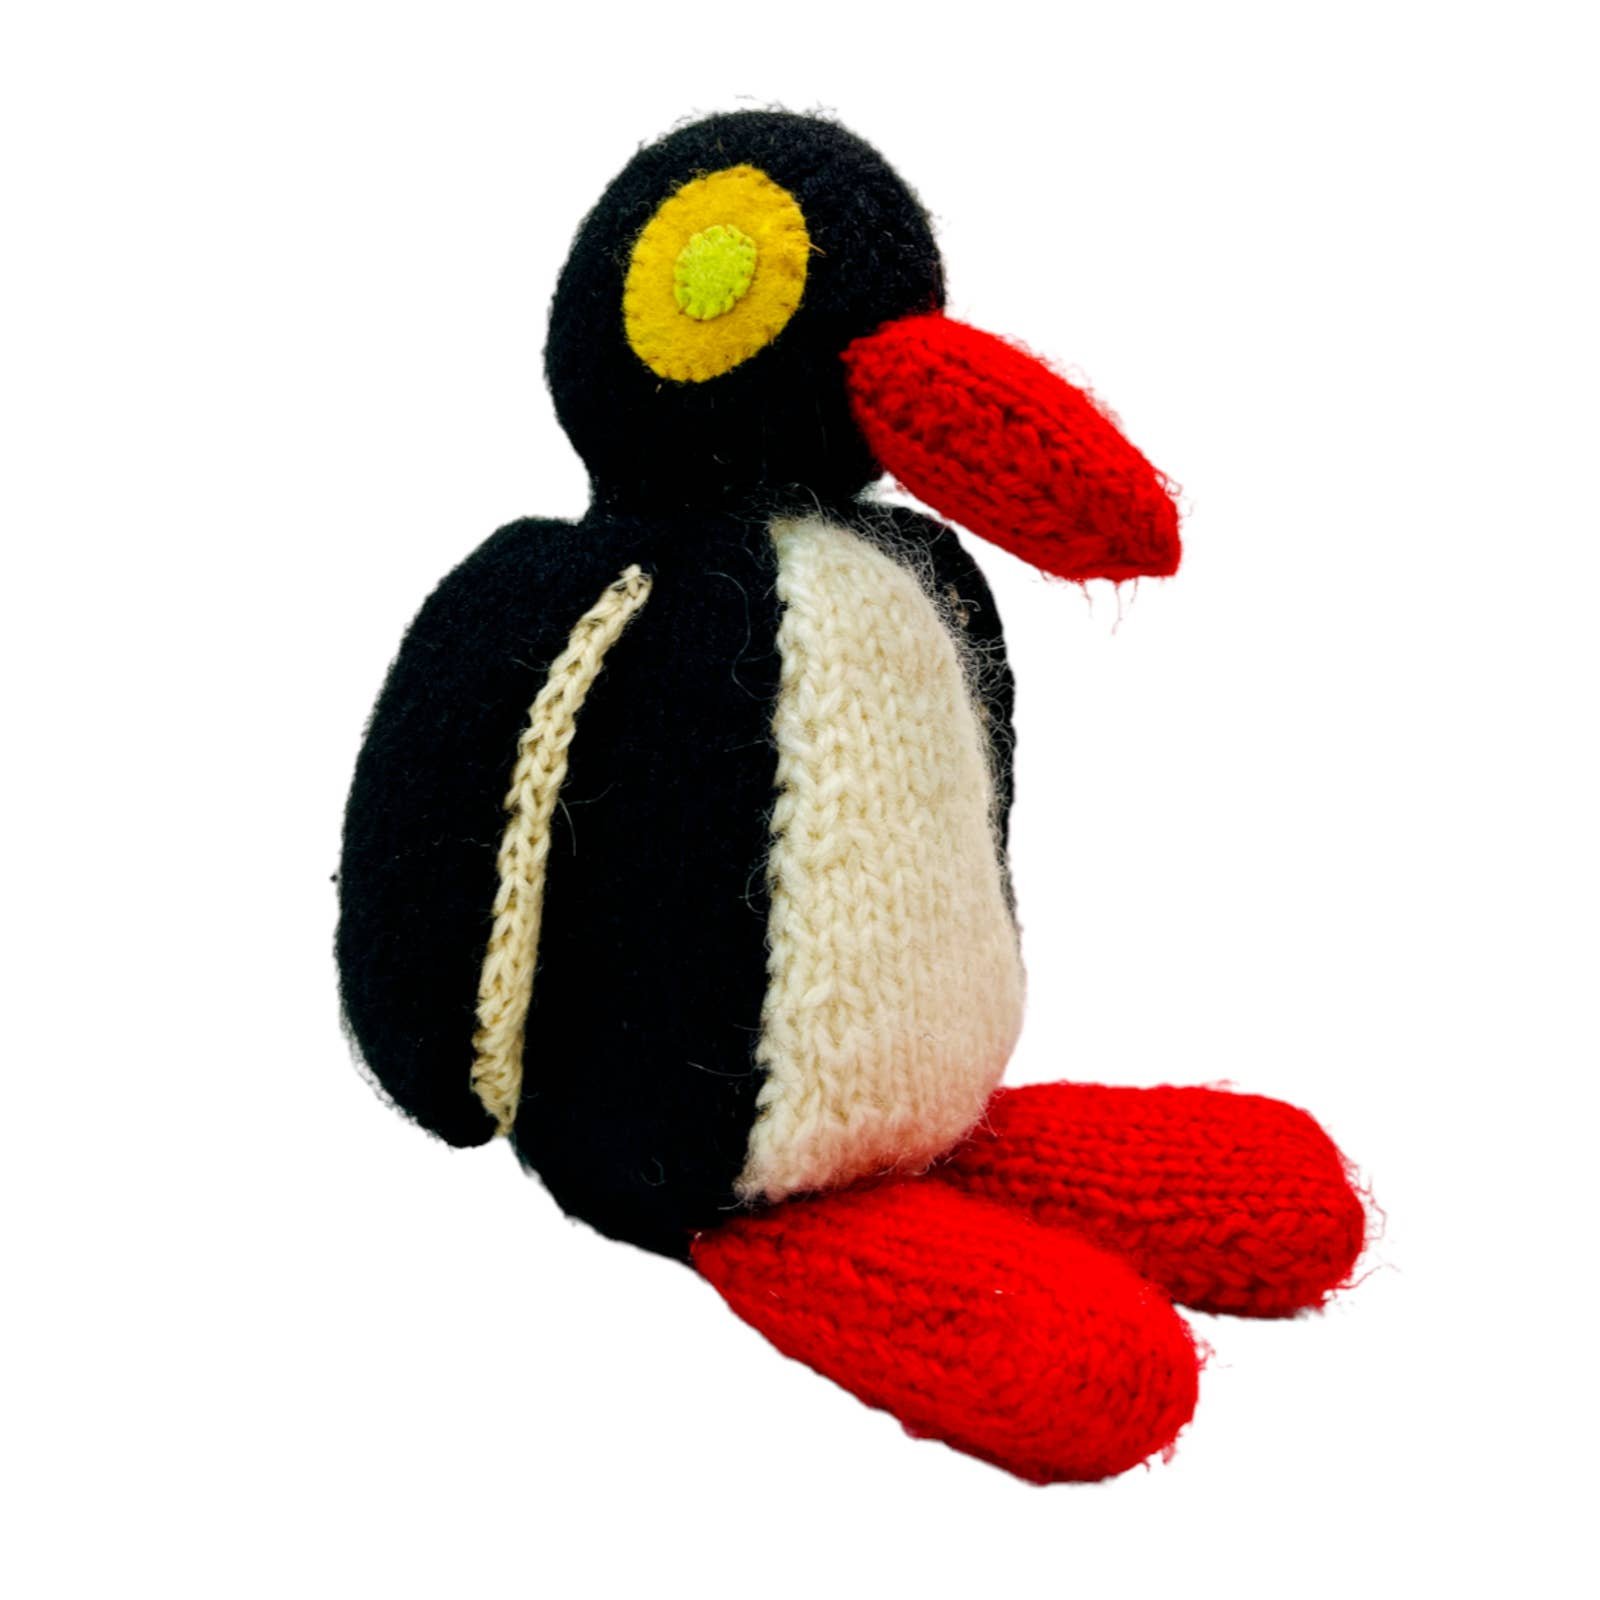 Knitted Penguin Plush Stuffed Animal Handmade Beanbag 6” Toy Cute Small OOAK fkATXx2jY